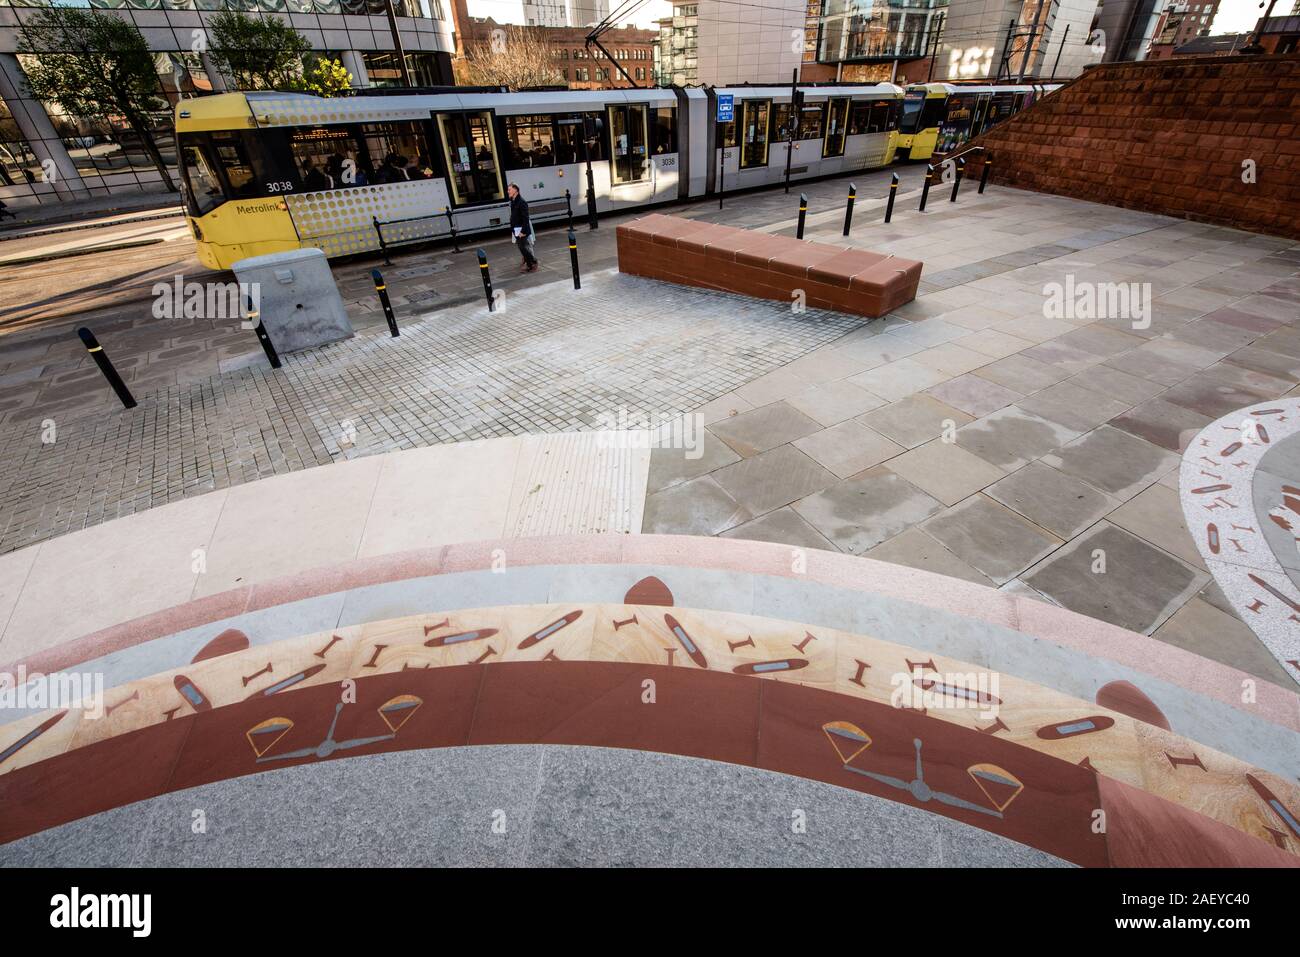 The Peterloo Memorial commemorating the Peterloo Massacre. Manchester, England. Stock Photo